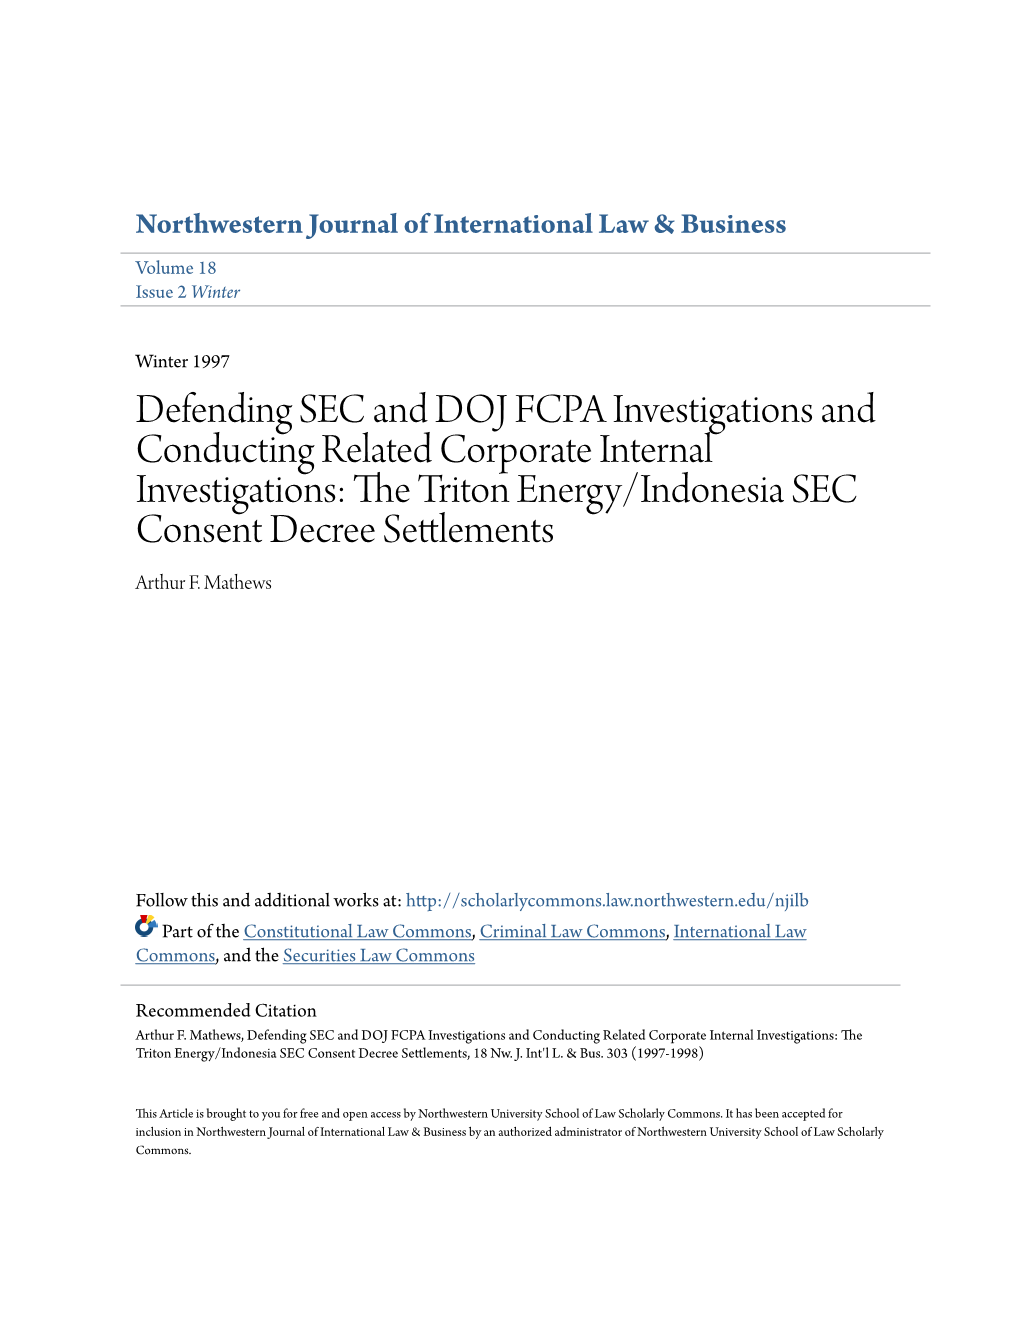 Defending SEC and DOJ FCPA Investigations and Conducting